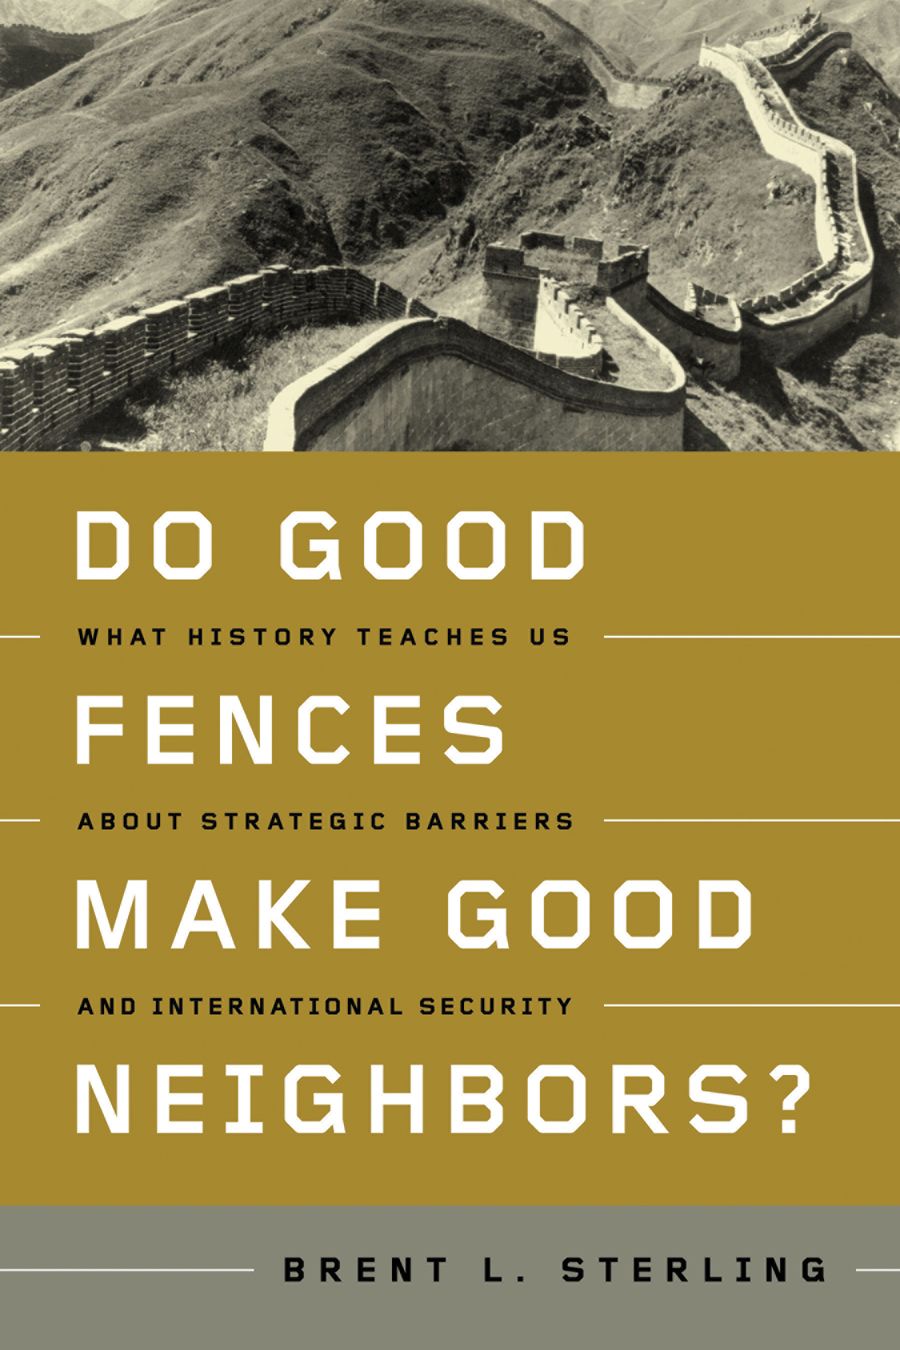 narrative essay about good fences make good neighbors